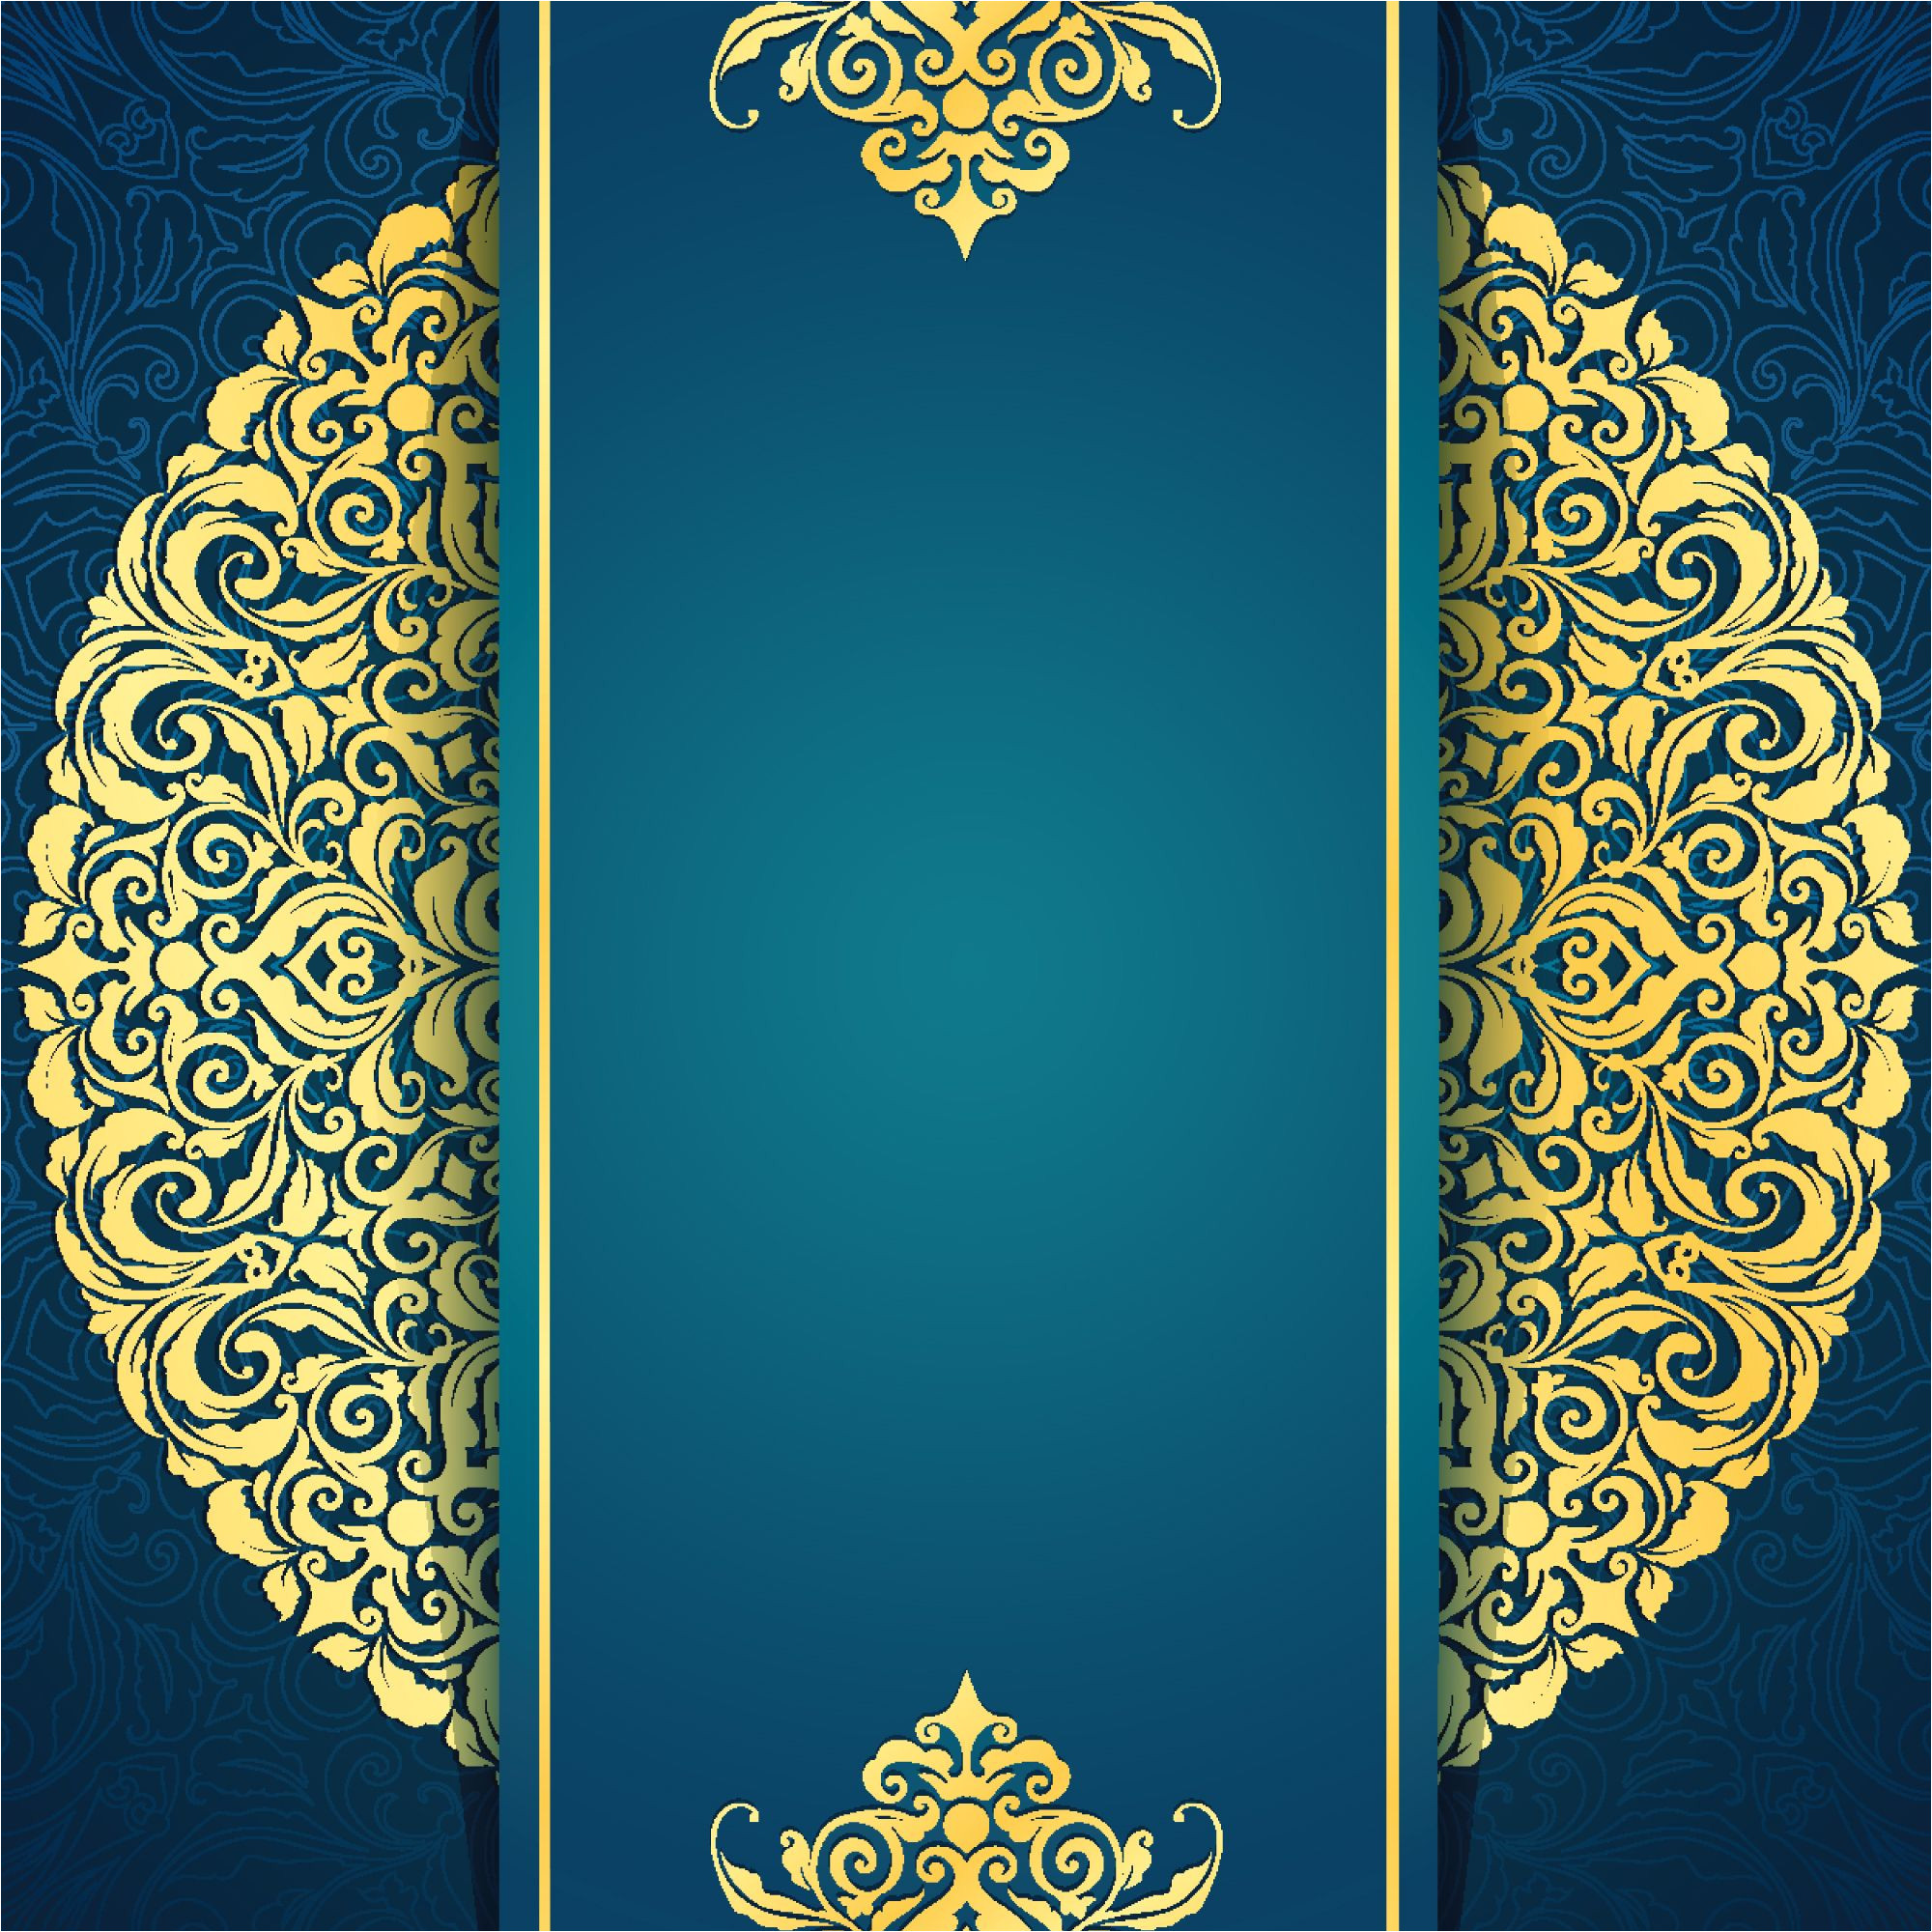 Hindu Wedding Invitation Card Background Design 14 Elegant Invitation Card Background Images Images with